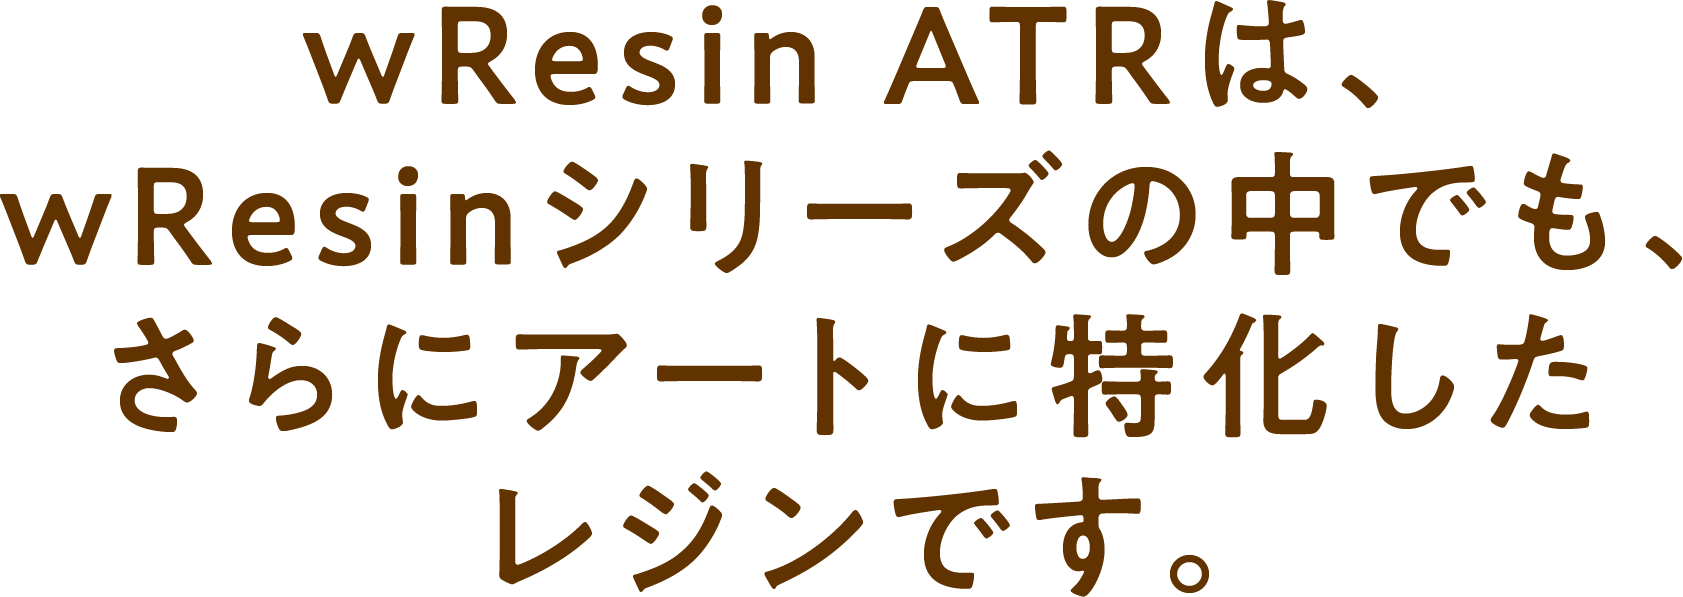 wResin ATRは、wResinシリーズの中でも、さらにアートに特化したレジンです。